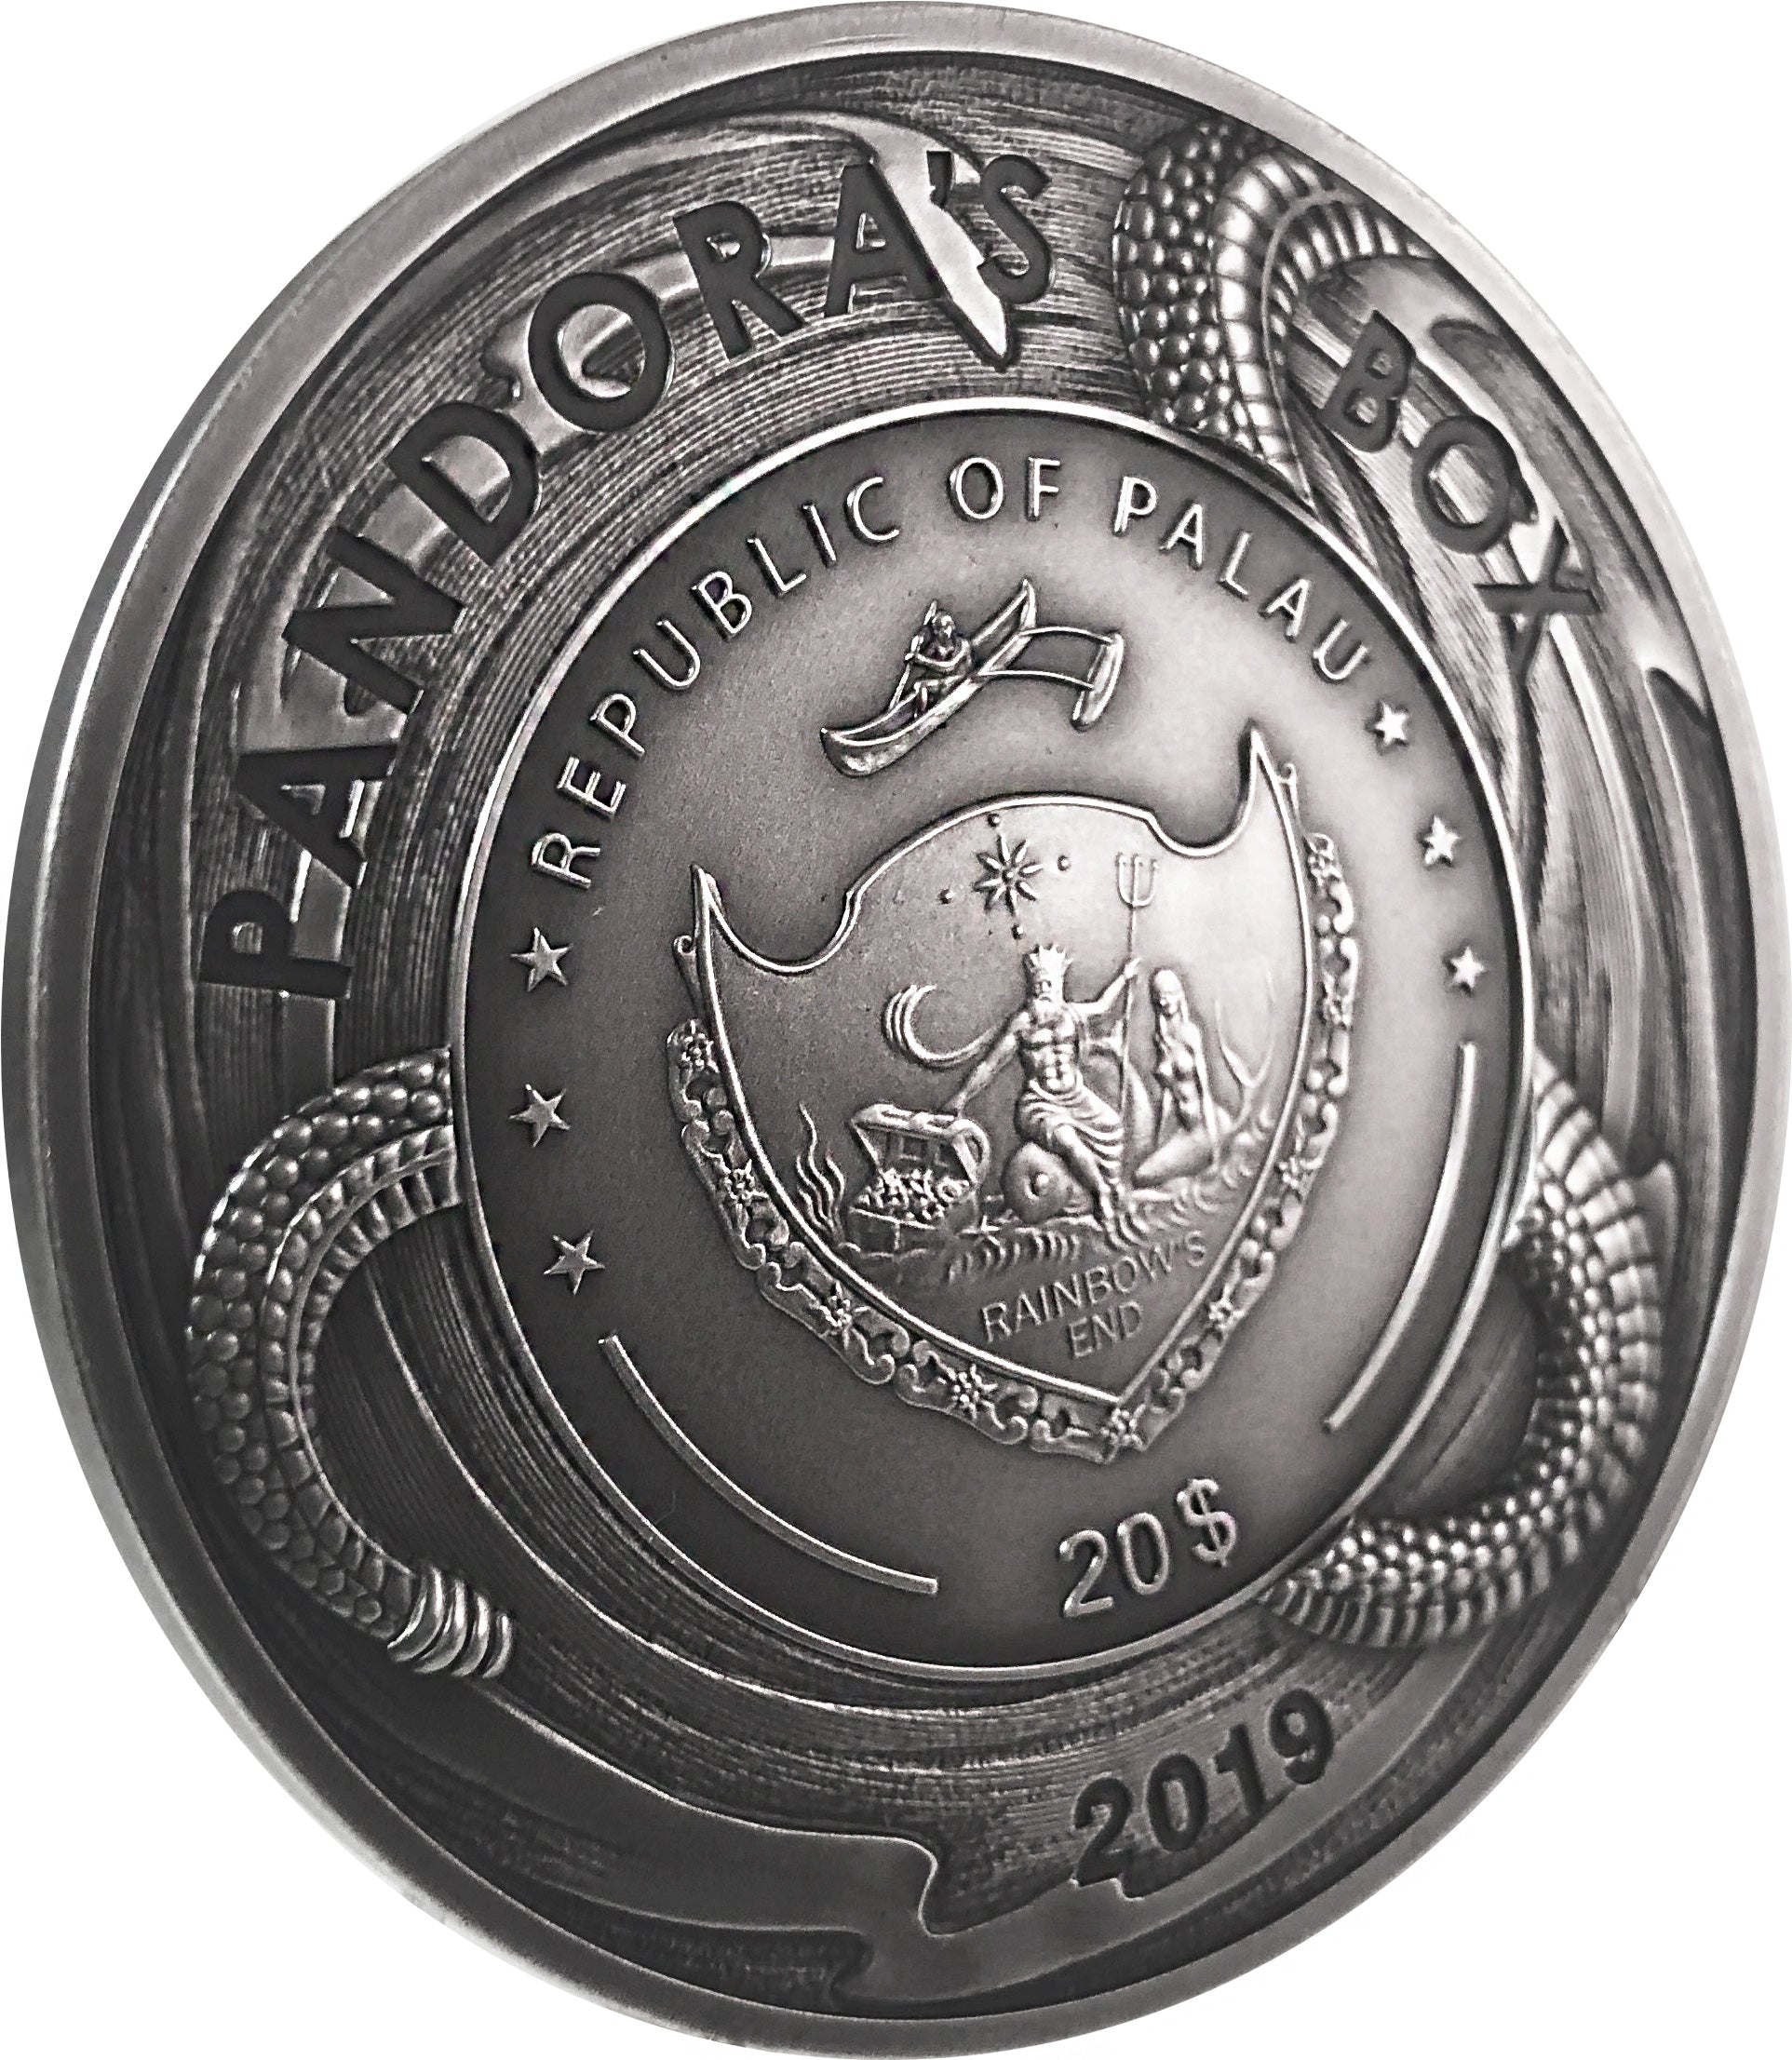 PANDORA BOX Evil Within EHR Epic High Relief 3 Oz Silver Coin $20 Palau 2019